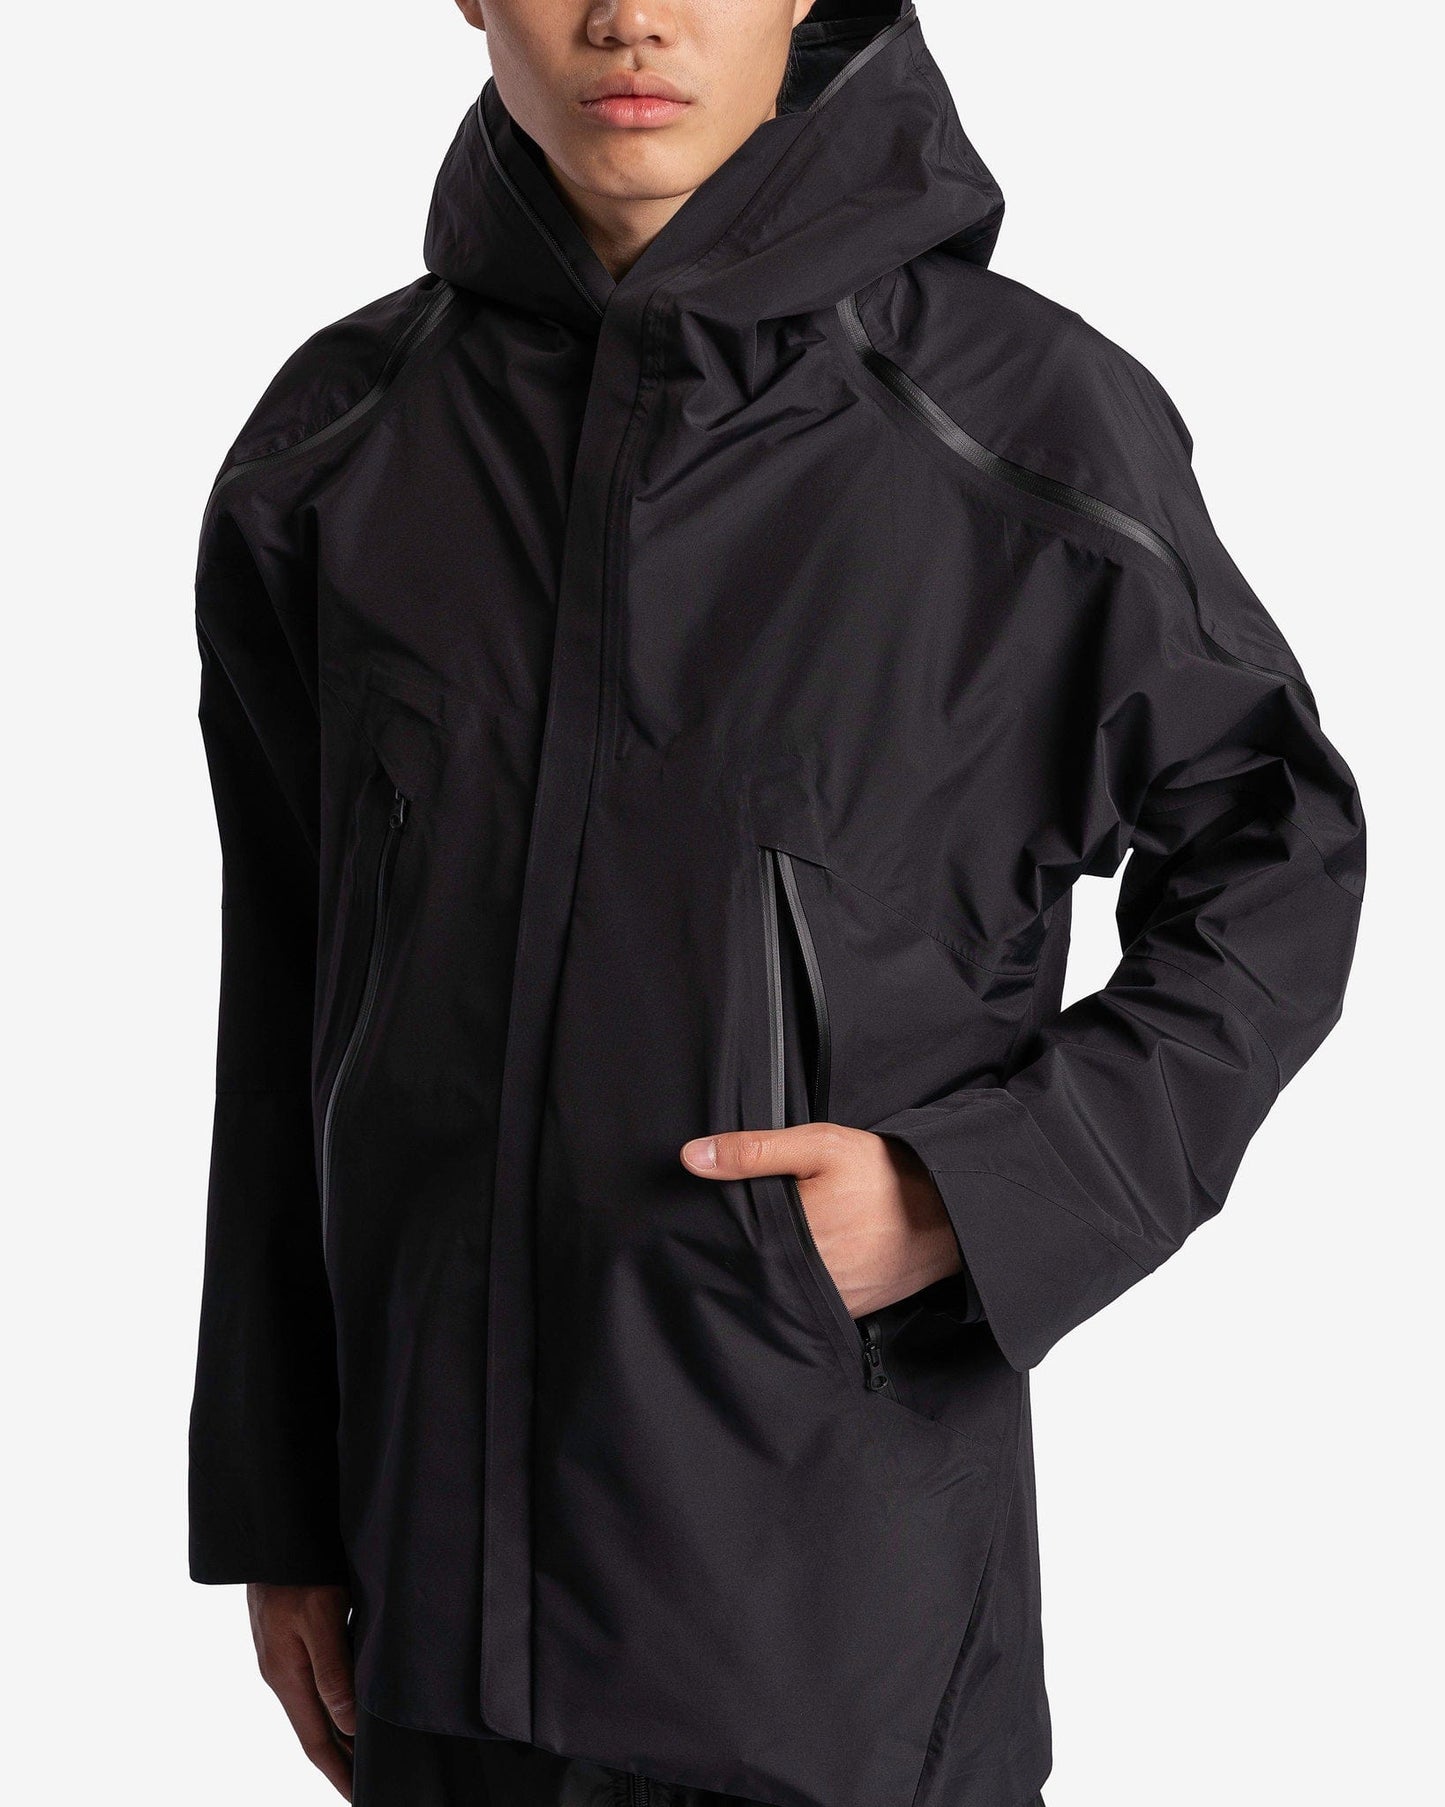 POST ARCHIVE FACTION (P.A.F) Men's Jackets LTEKS Storm Breaker by Post Archive Faction in Black